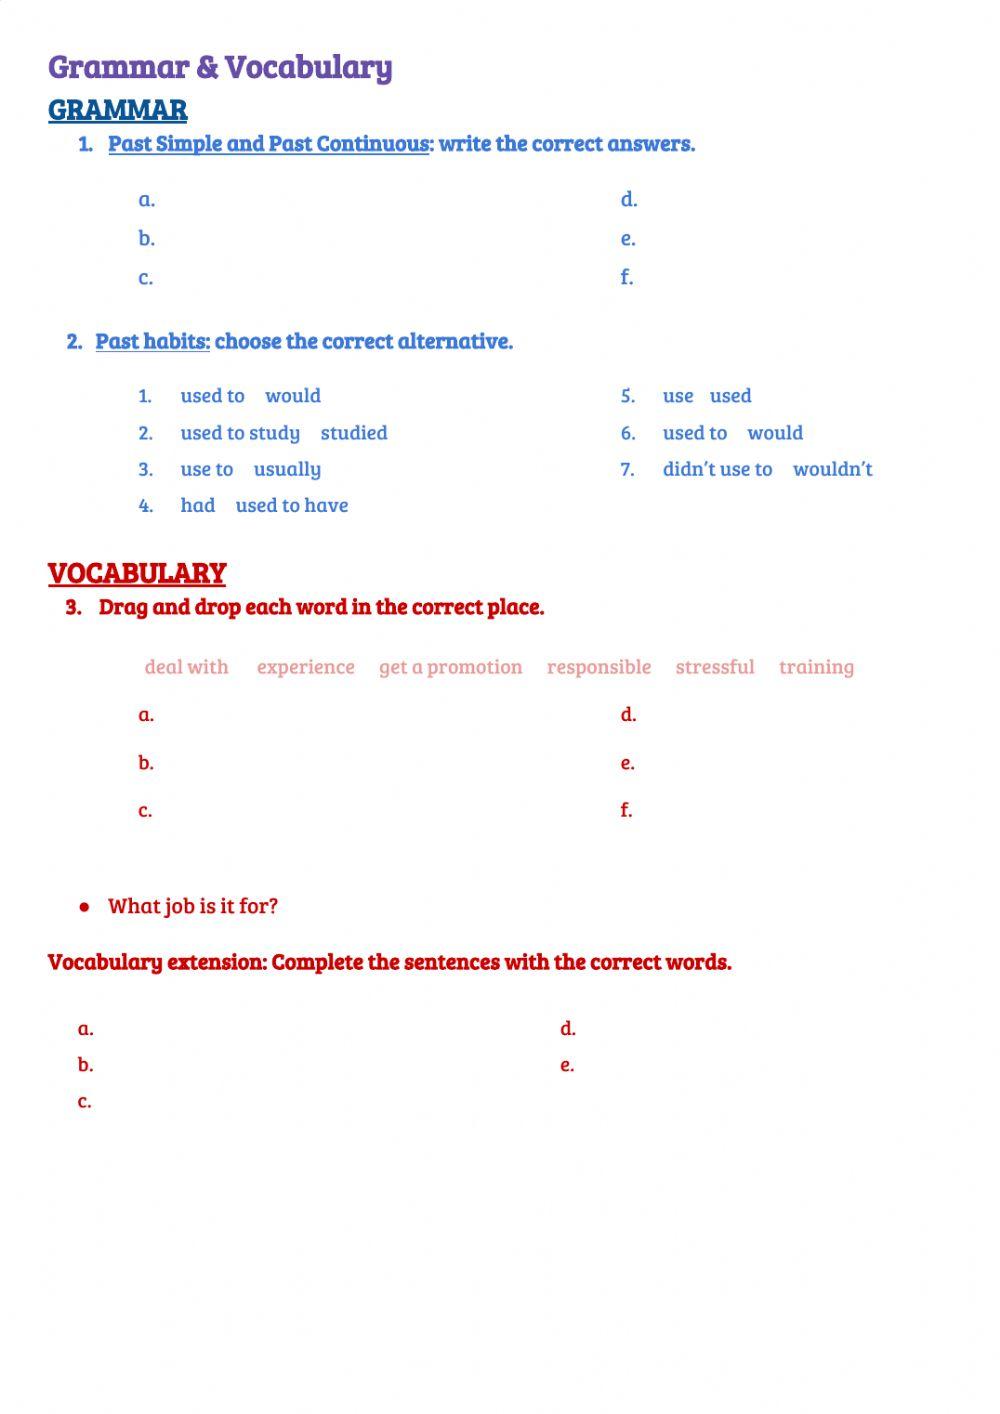 Grammar and vocabulary practice